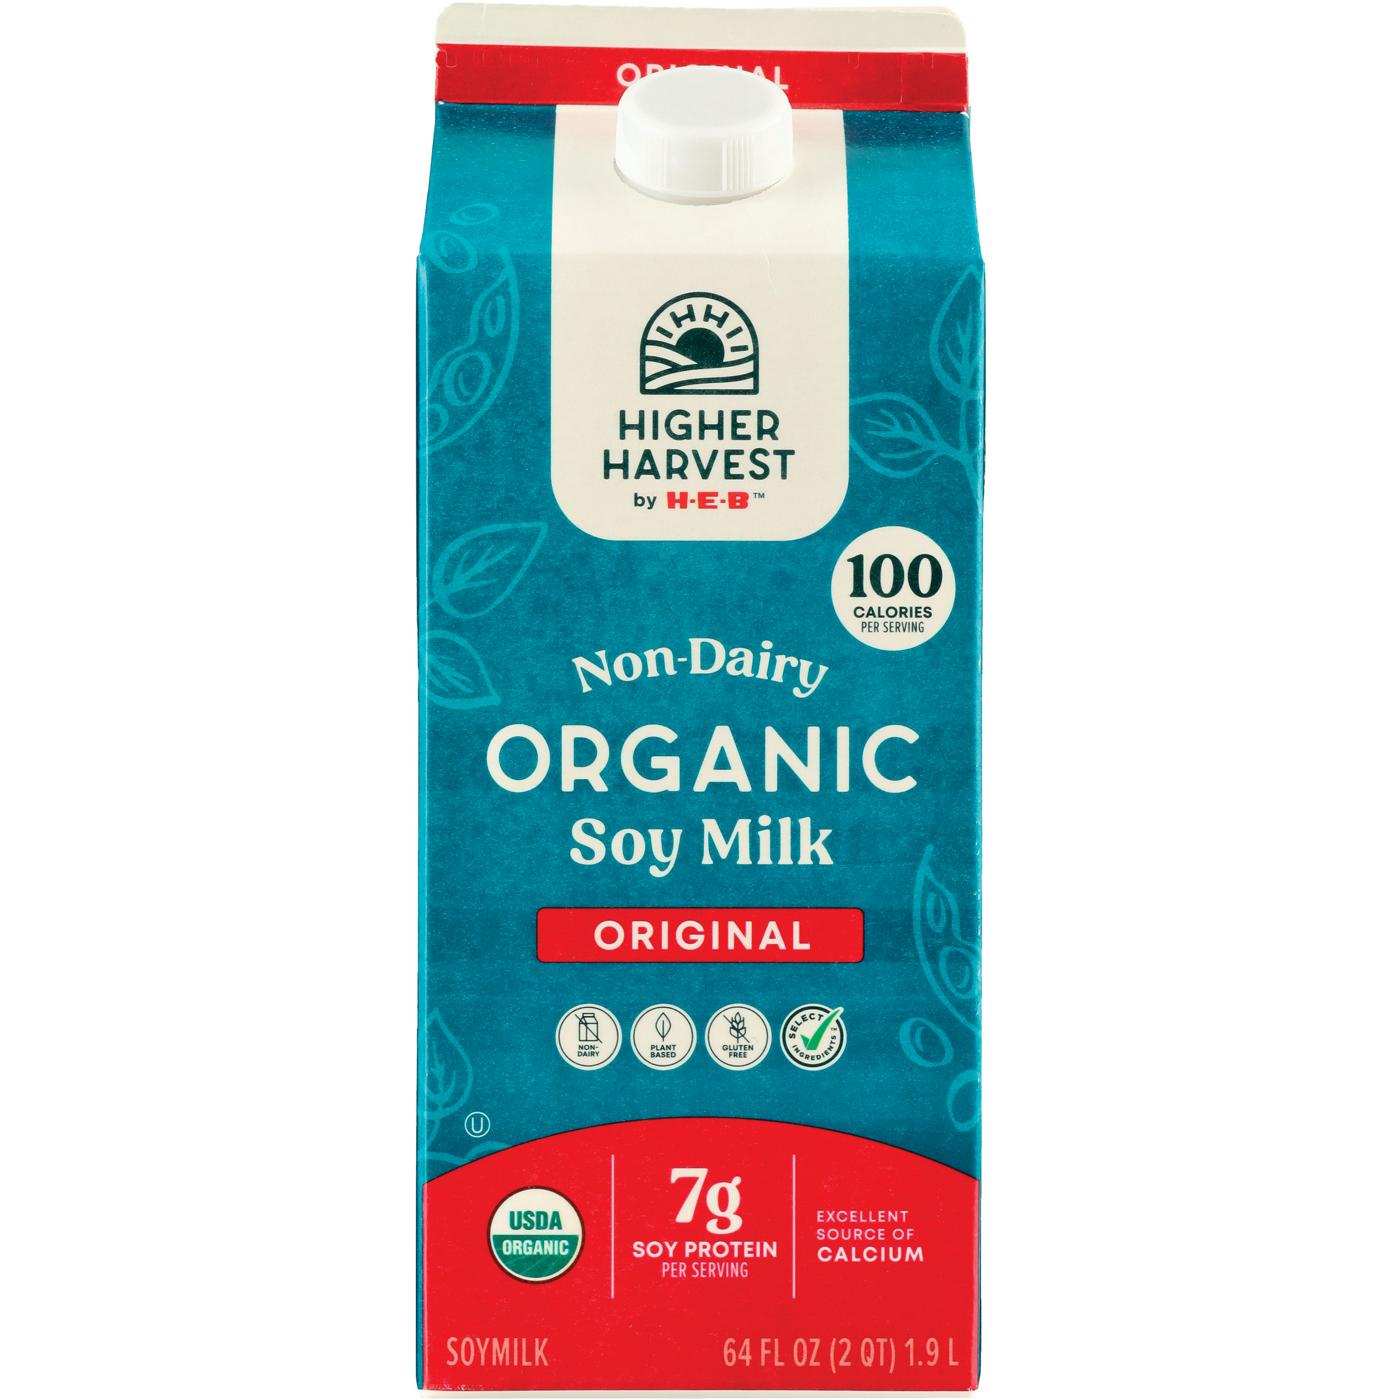 Higher Harvest by H-E-B Organic Non-Dairy Soy Milk – Original - Shop ...